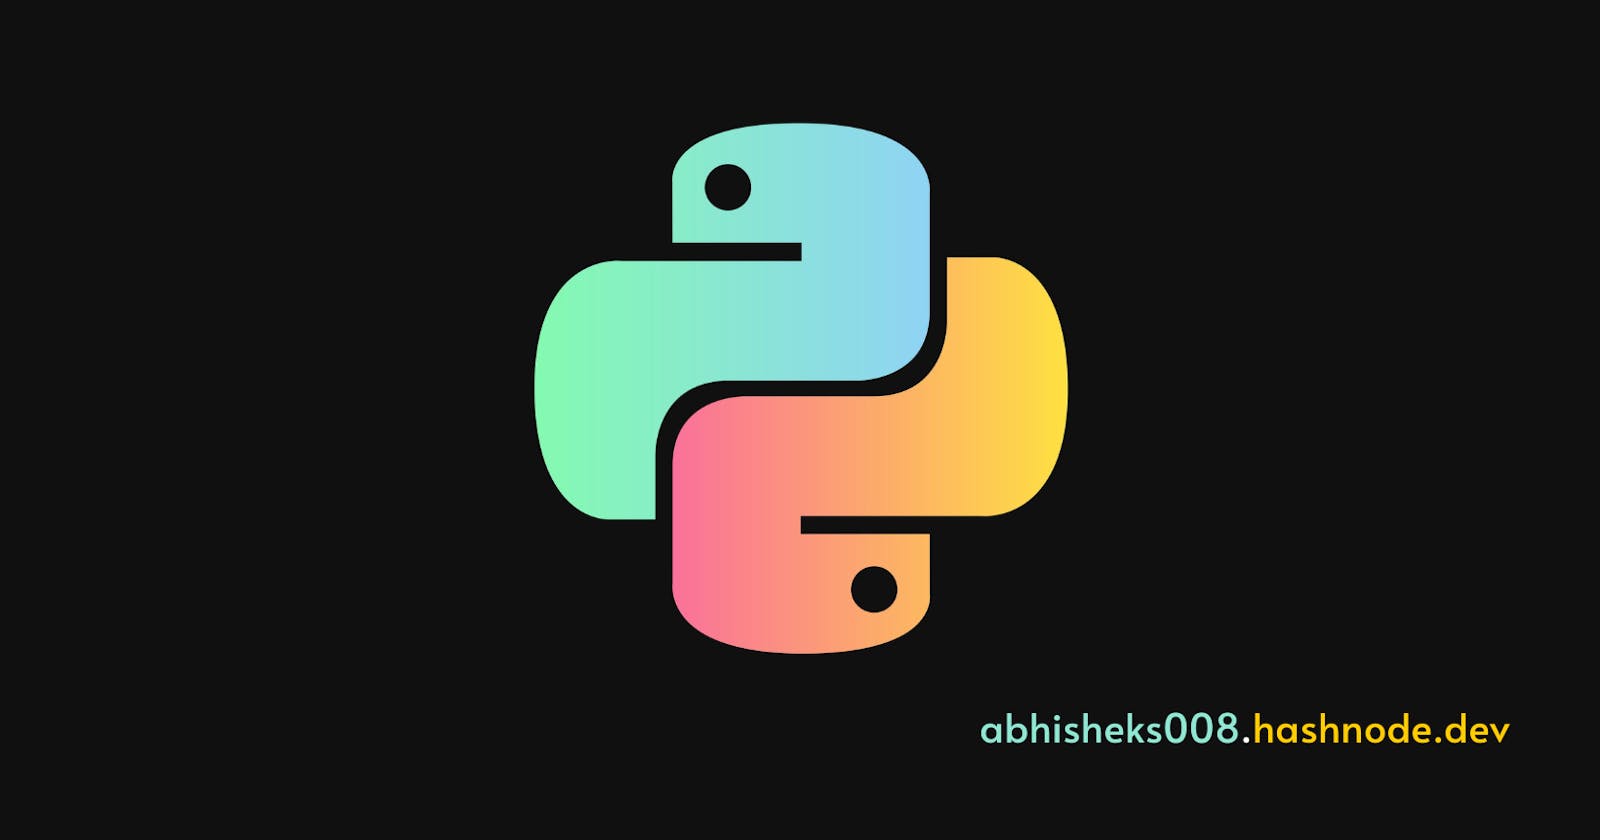 Python, not a snake, but a programming language!